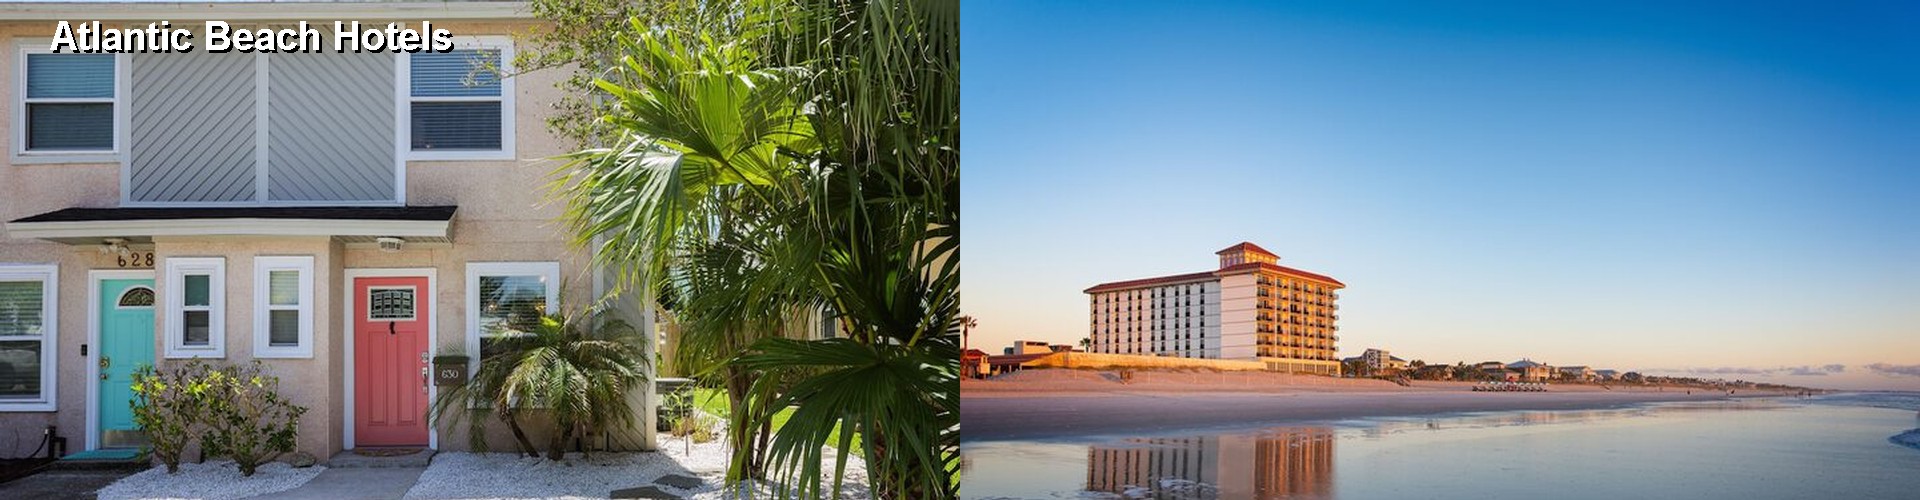 5 Best Hotels near Atlantic Beach